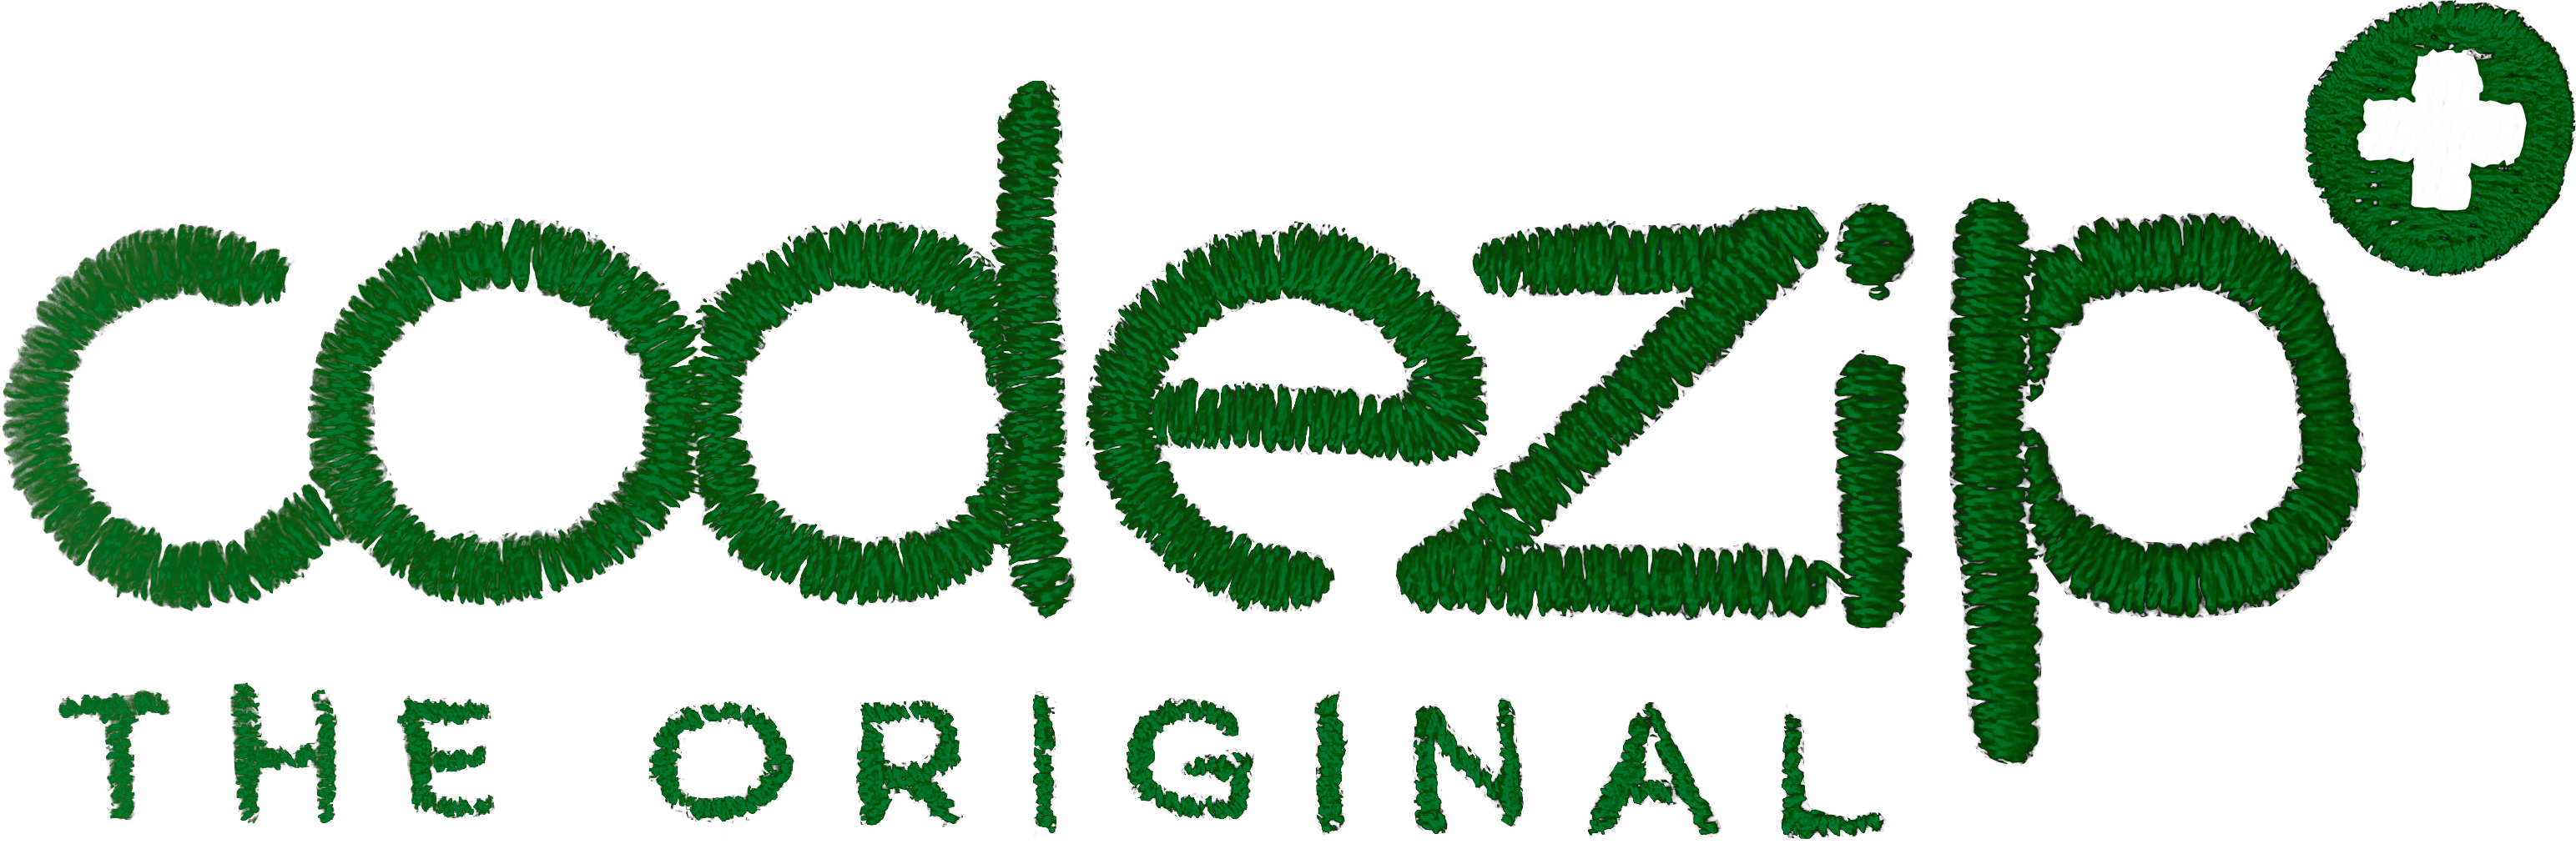 Logo green forest